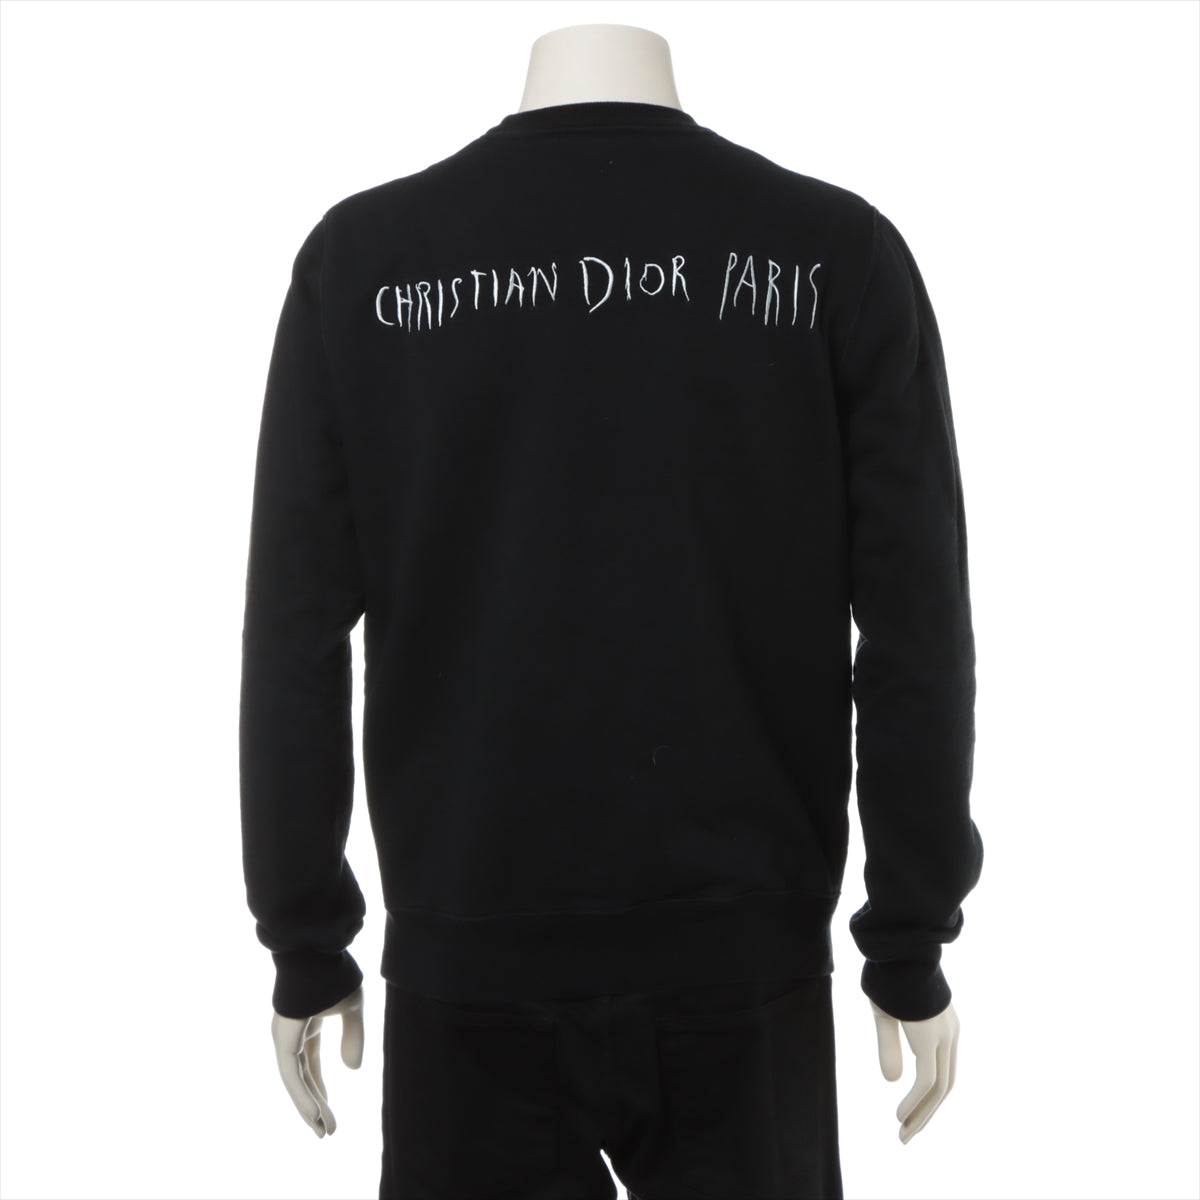 Dior x Raymond Petibon Cotton & rayon Basic knitted fabric M Men's Black  943J612E0531